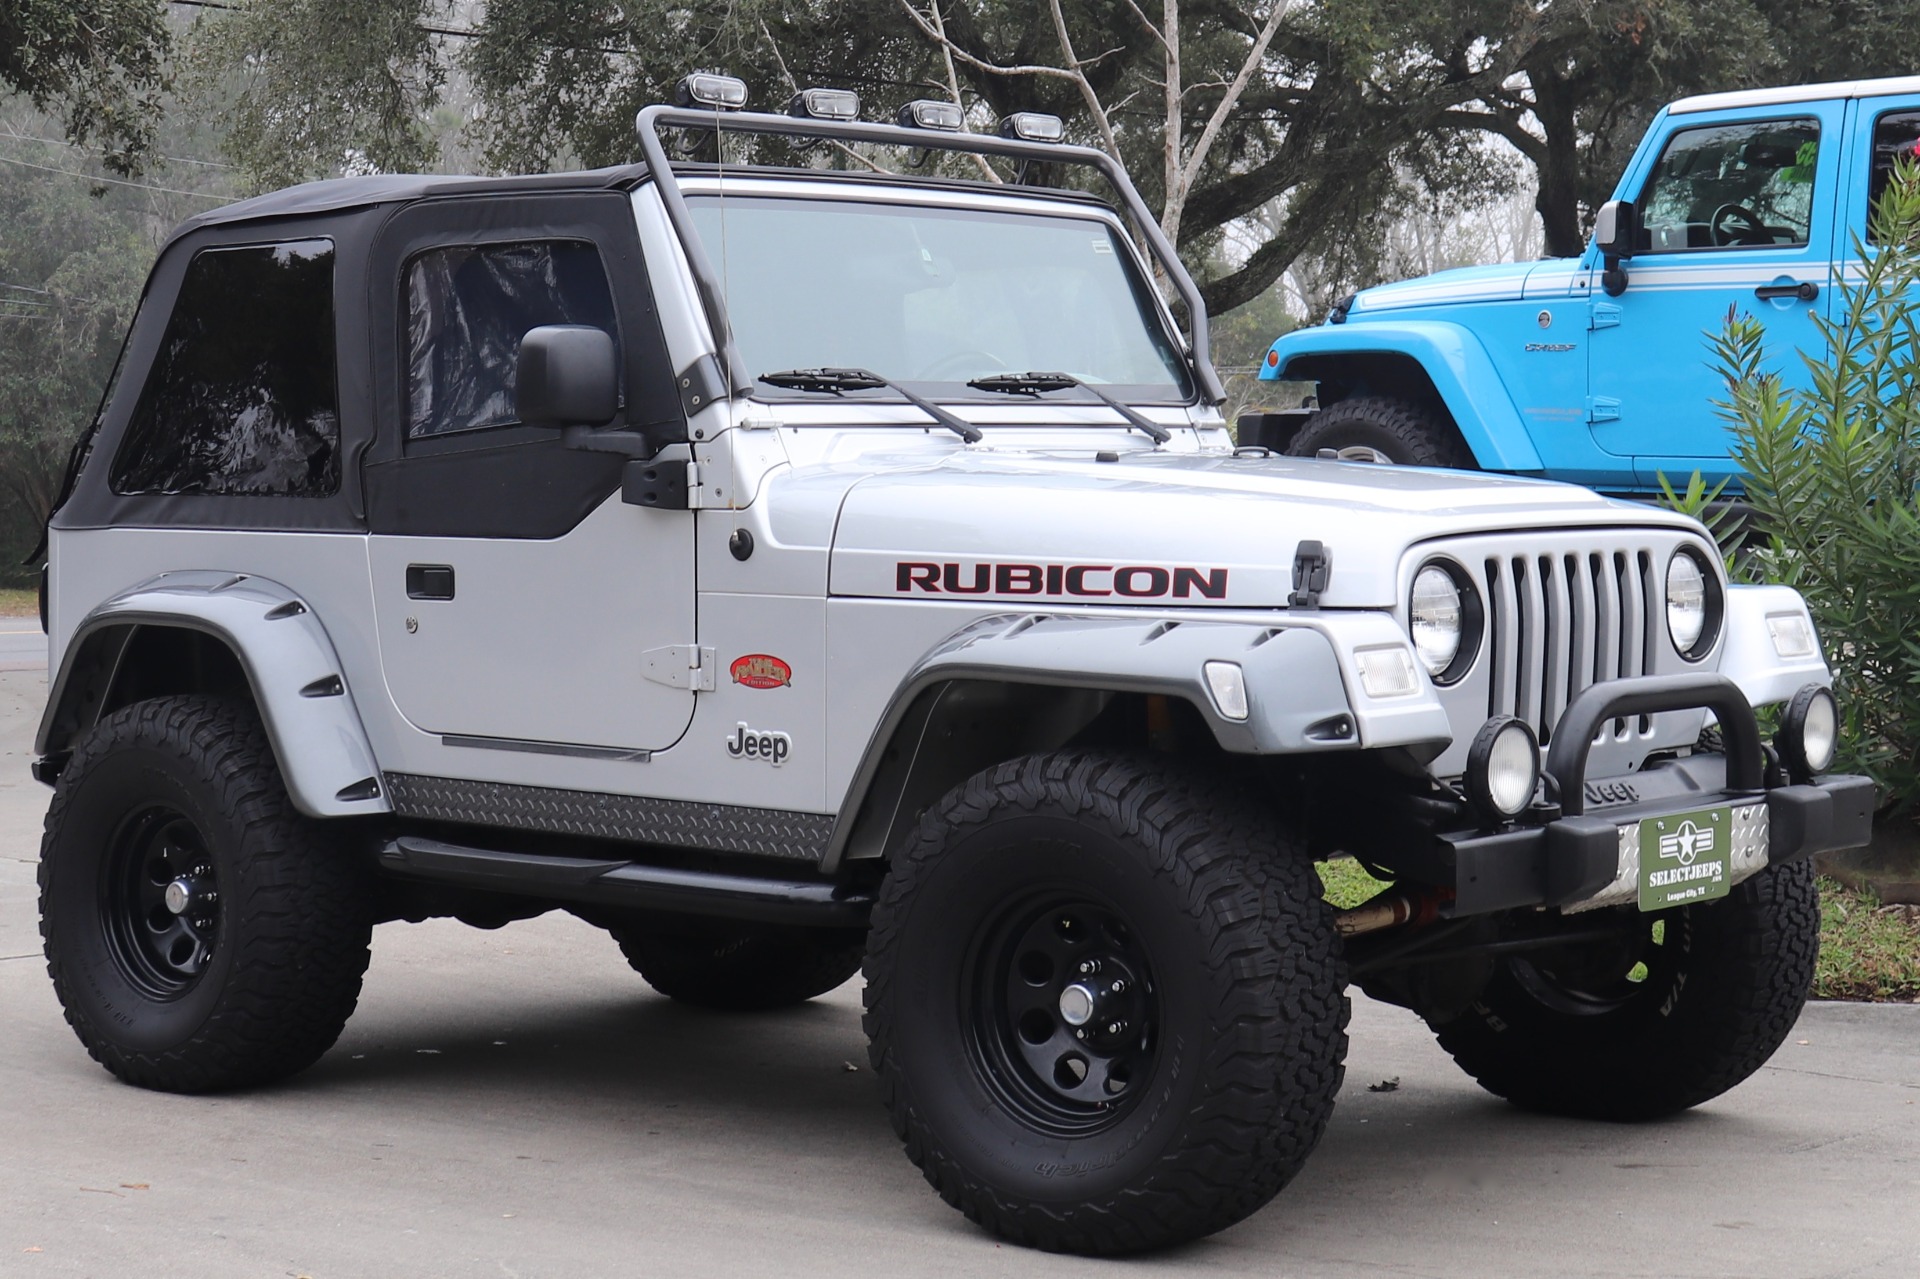 Used-2003-Jeep-Wrangler-Rubicon-Tomb-Raider